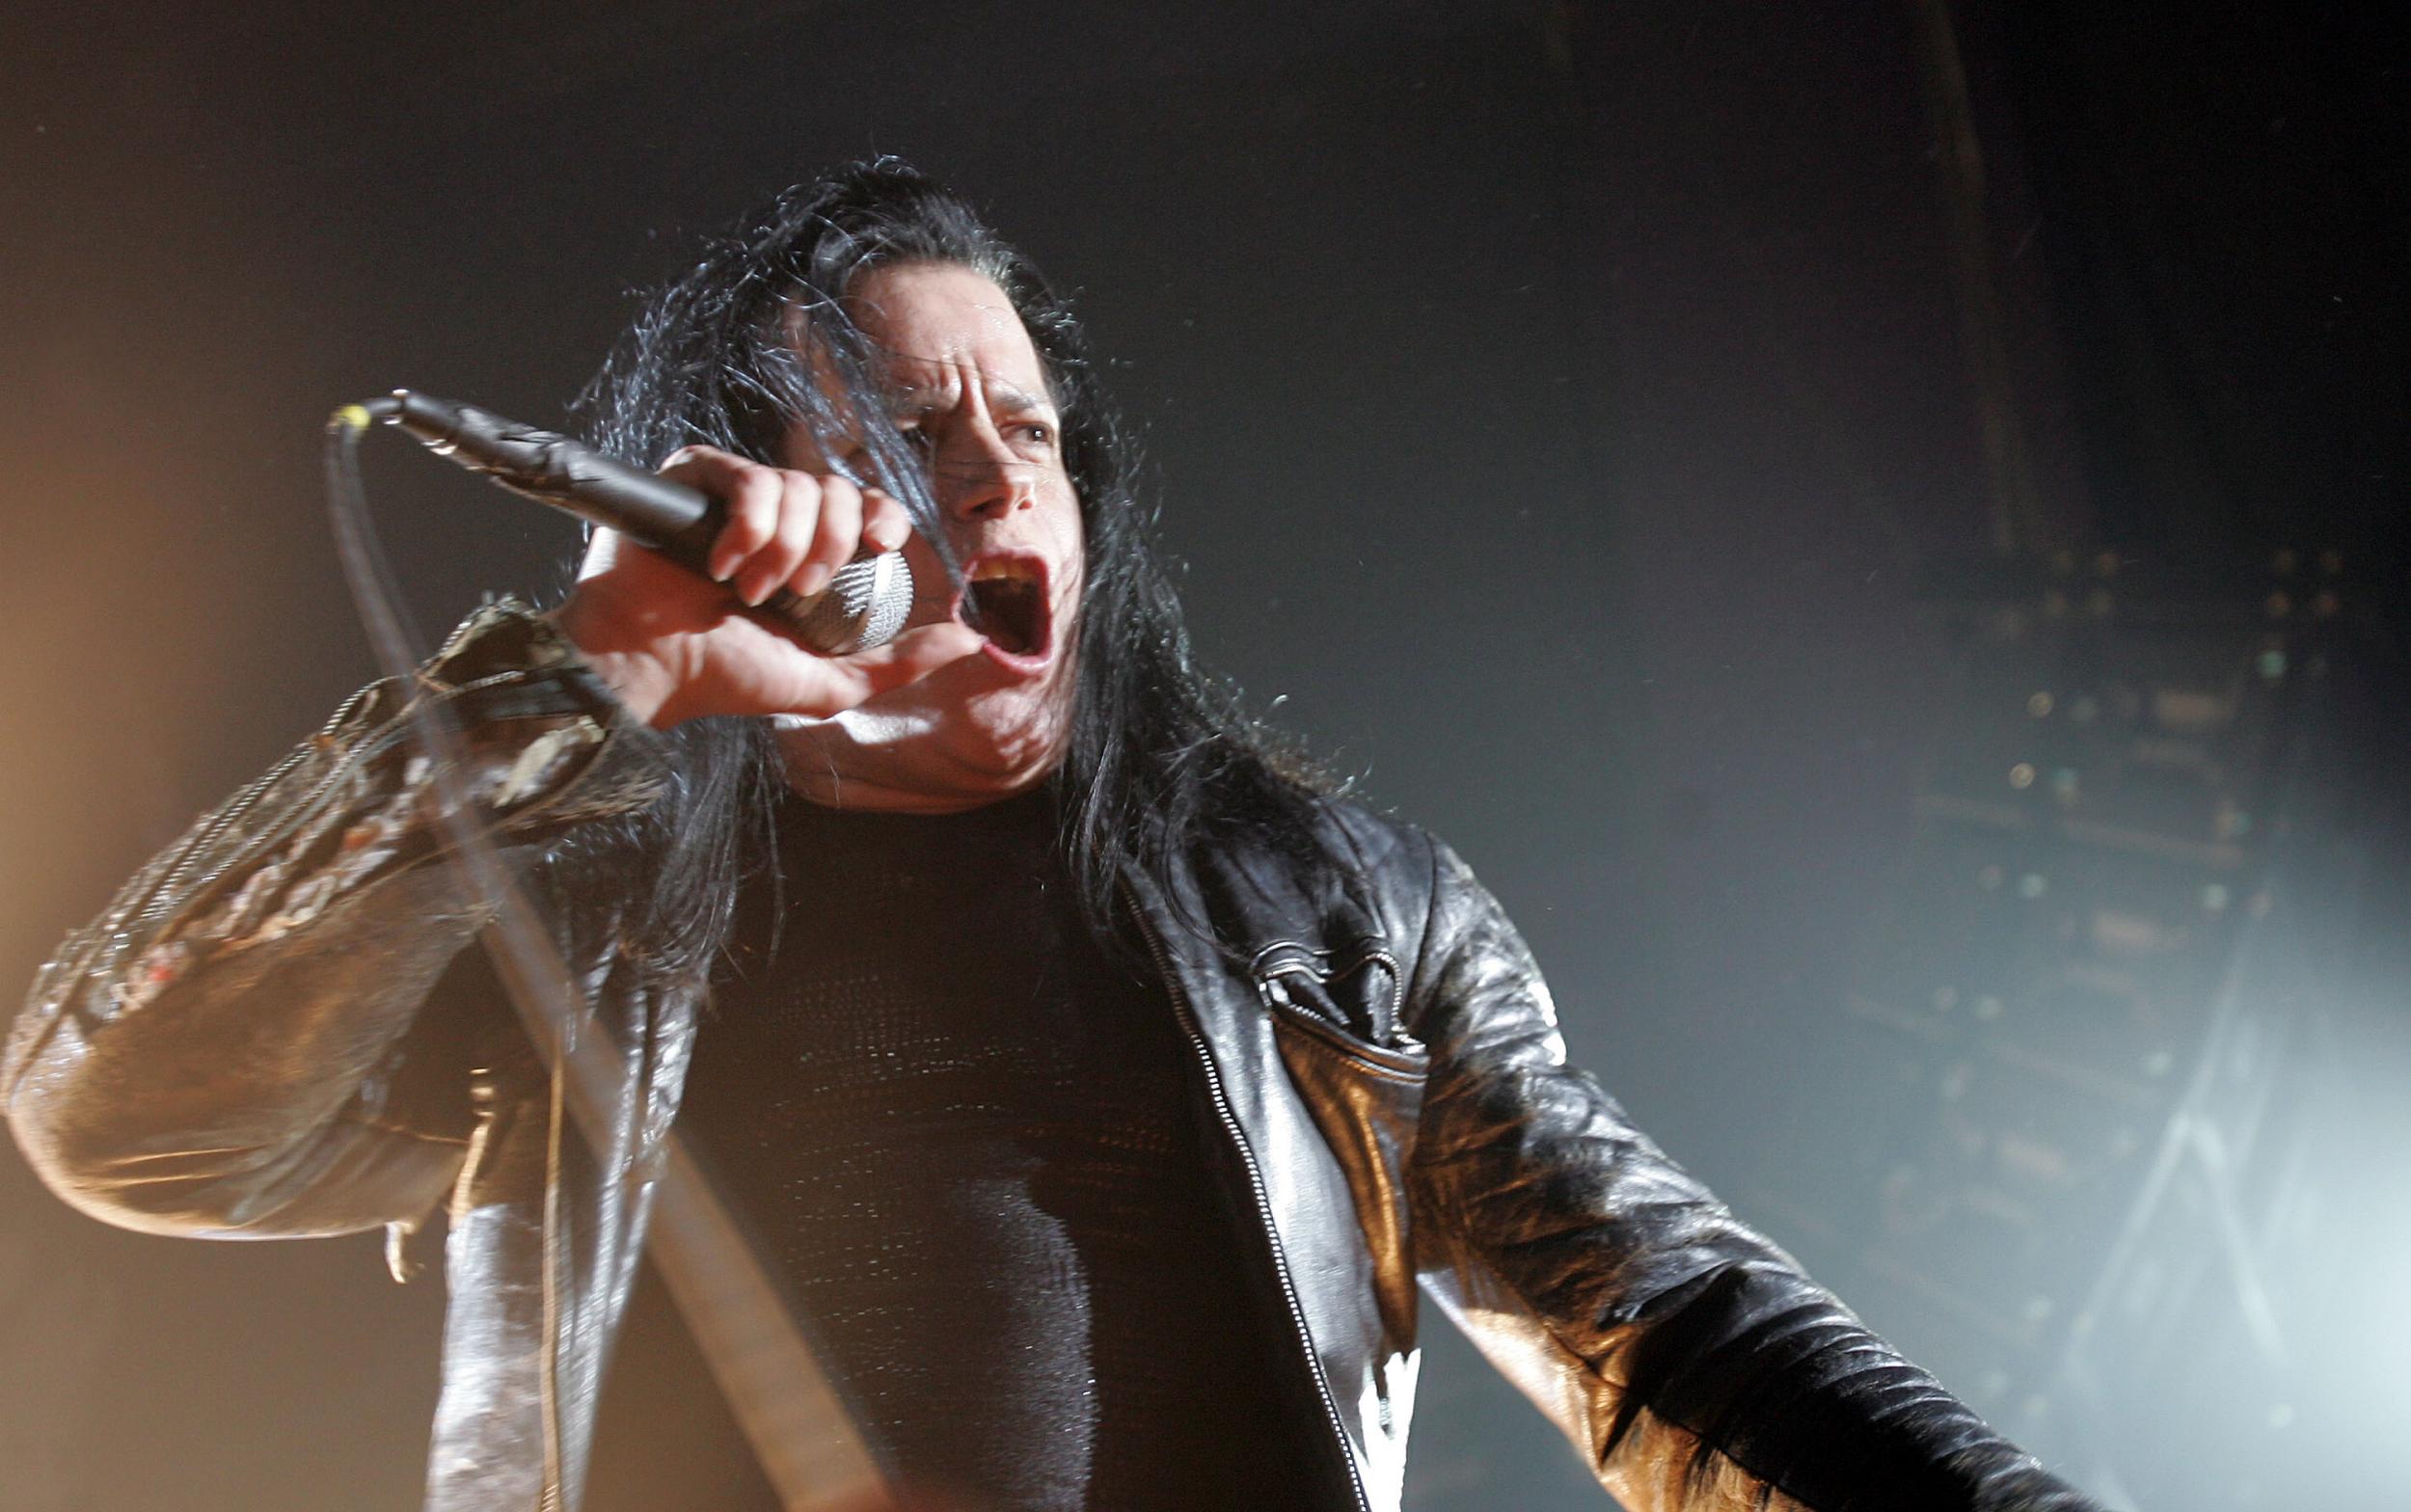 Glenn Danzig on stage in 2005